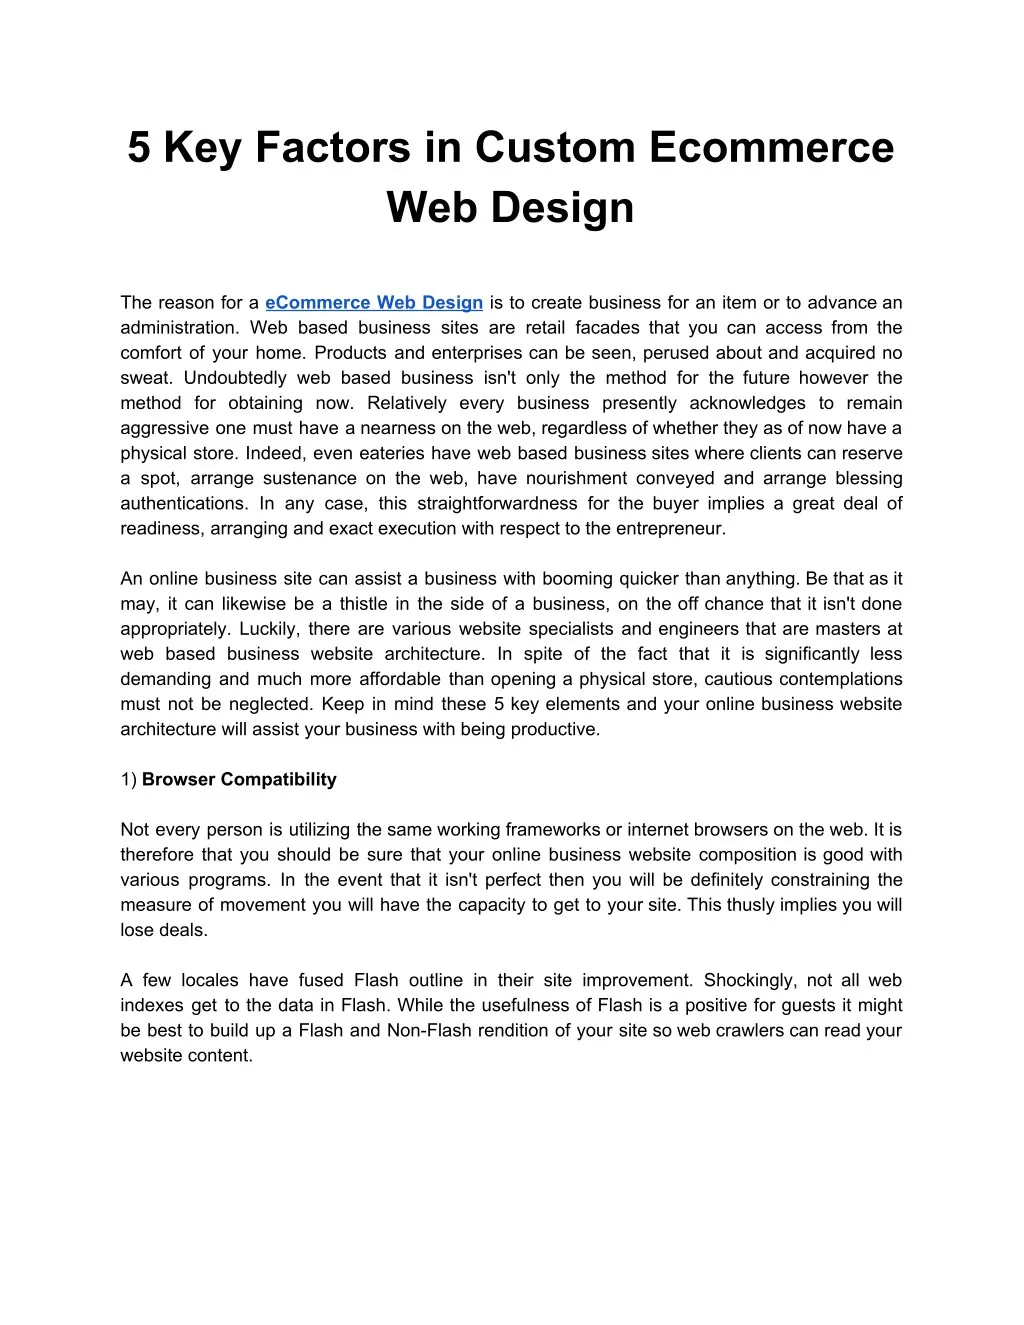 5 key factors in custom ecommerce web design